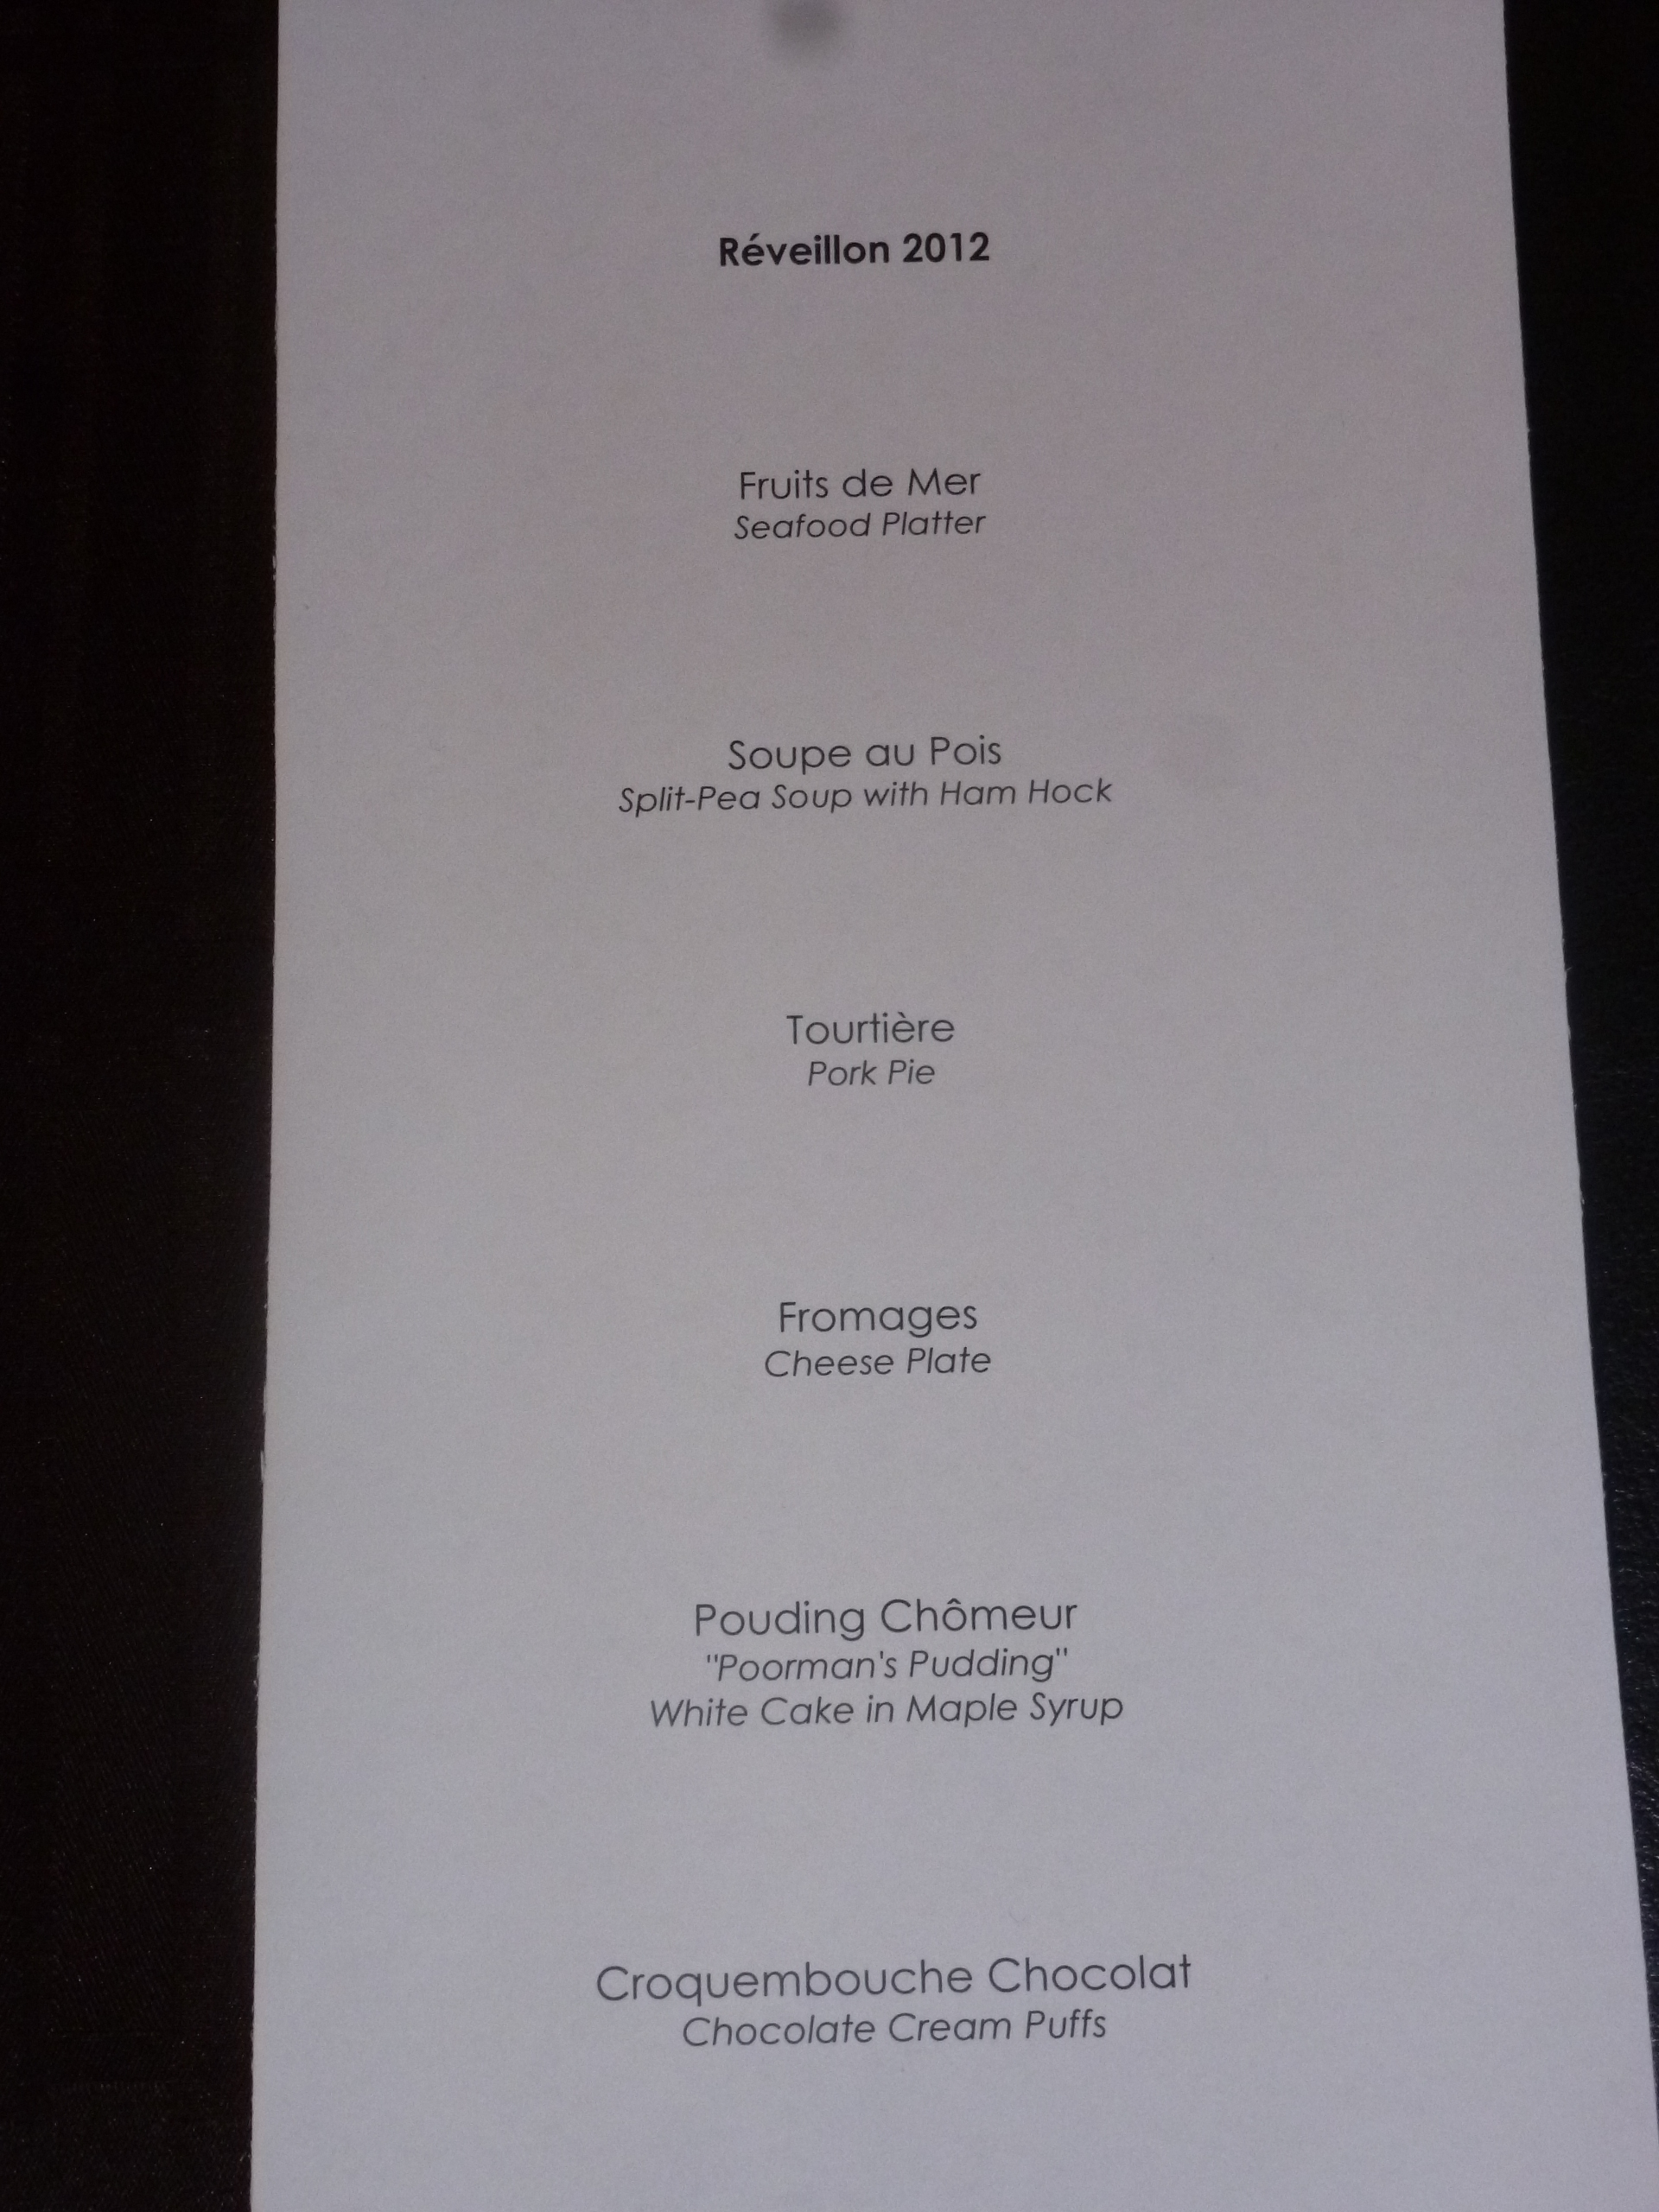 The menu for Réveillon 2012